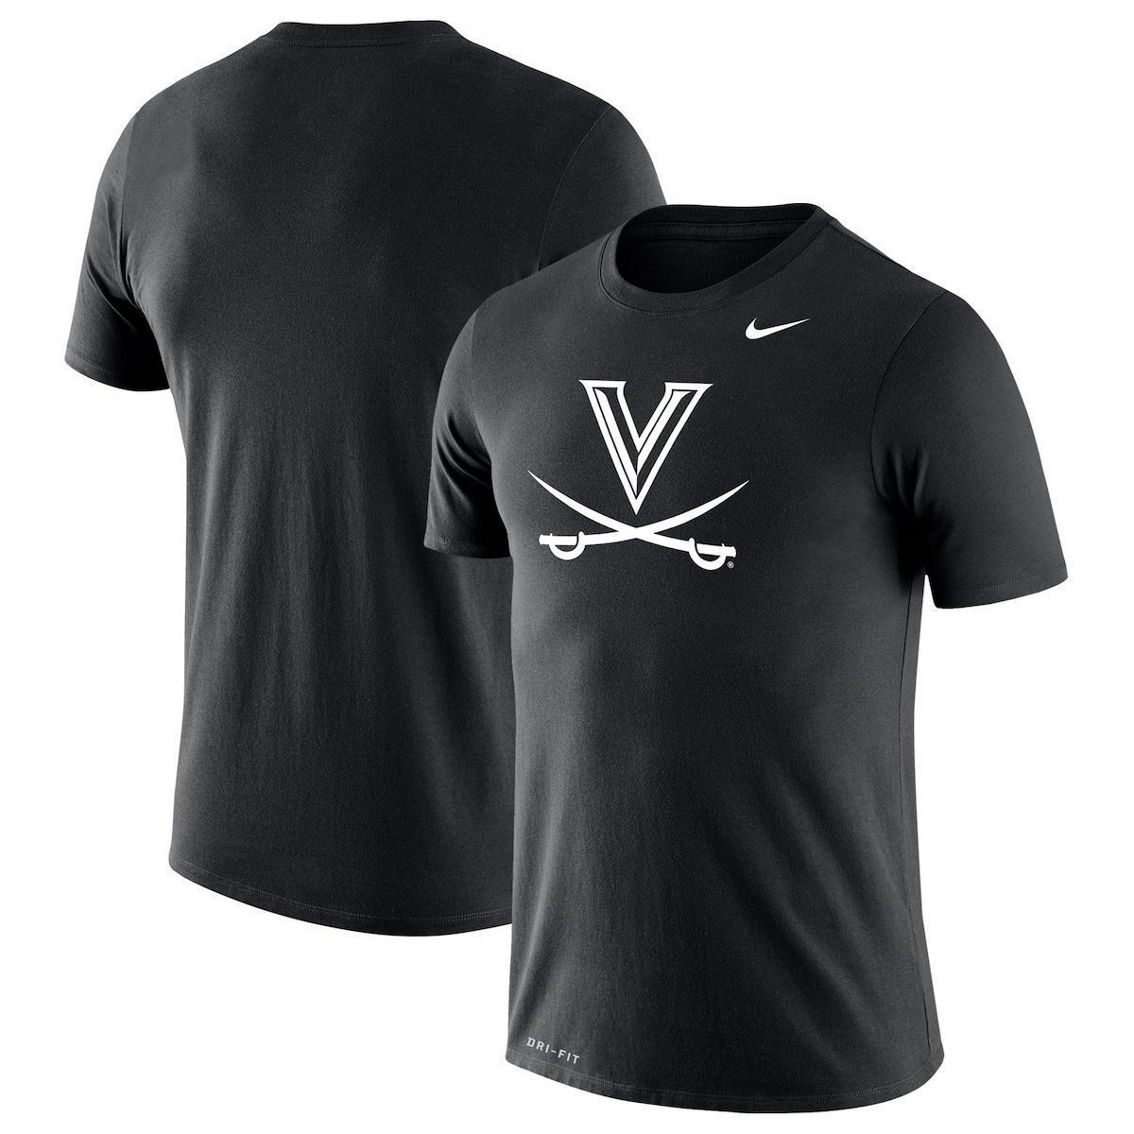 Nike Men's Black Virginia Cavaliers Dark Mode 2.0 Performance T-Shirt